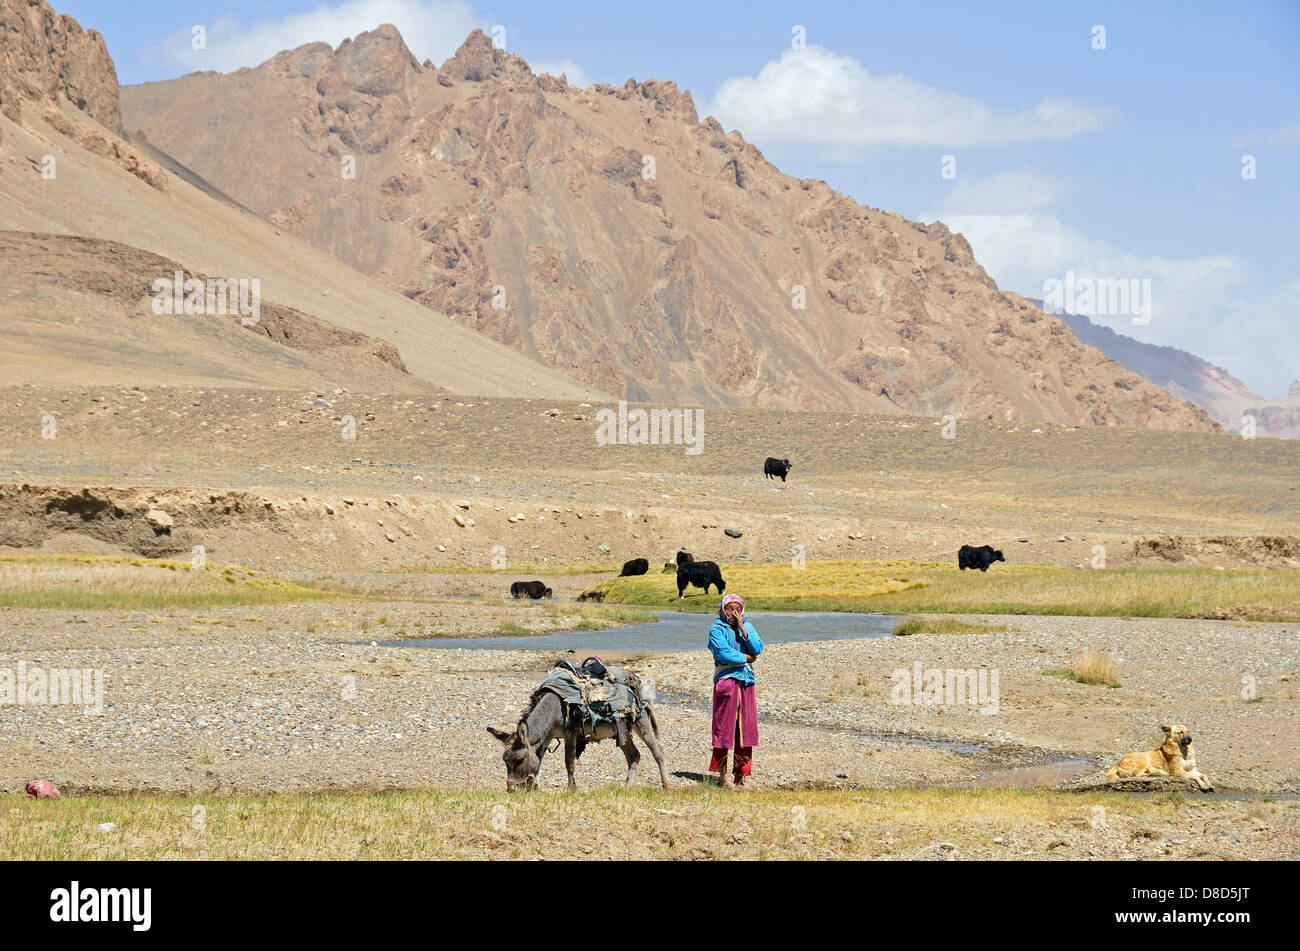 Nómadas kirguises cabalgando un burro y pastoreo yaks en las montañas de Pamir, Tayikistán Foto de stock